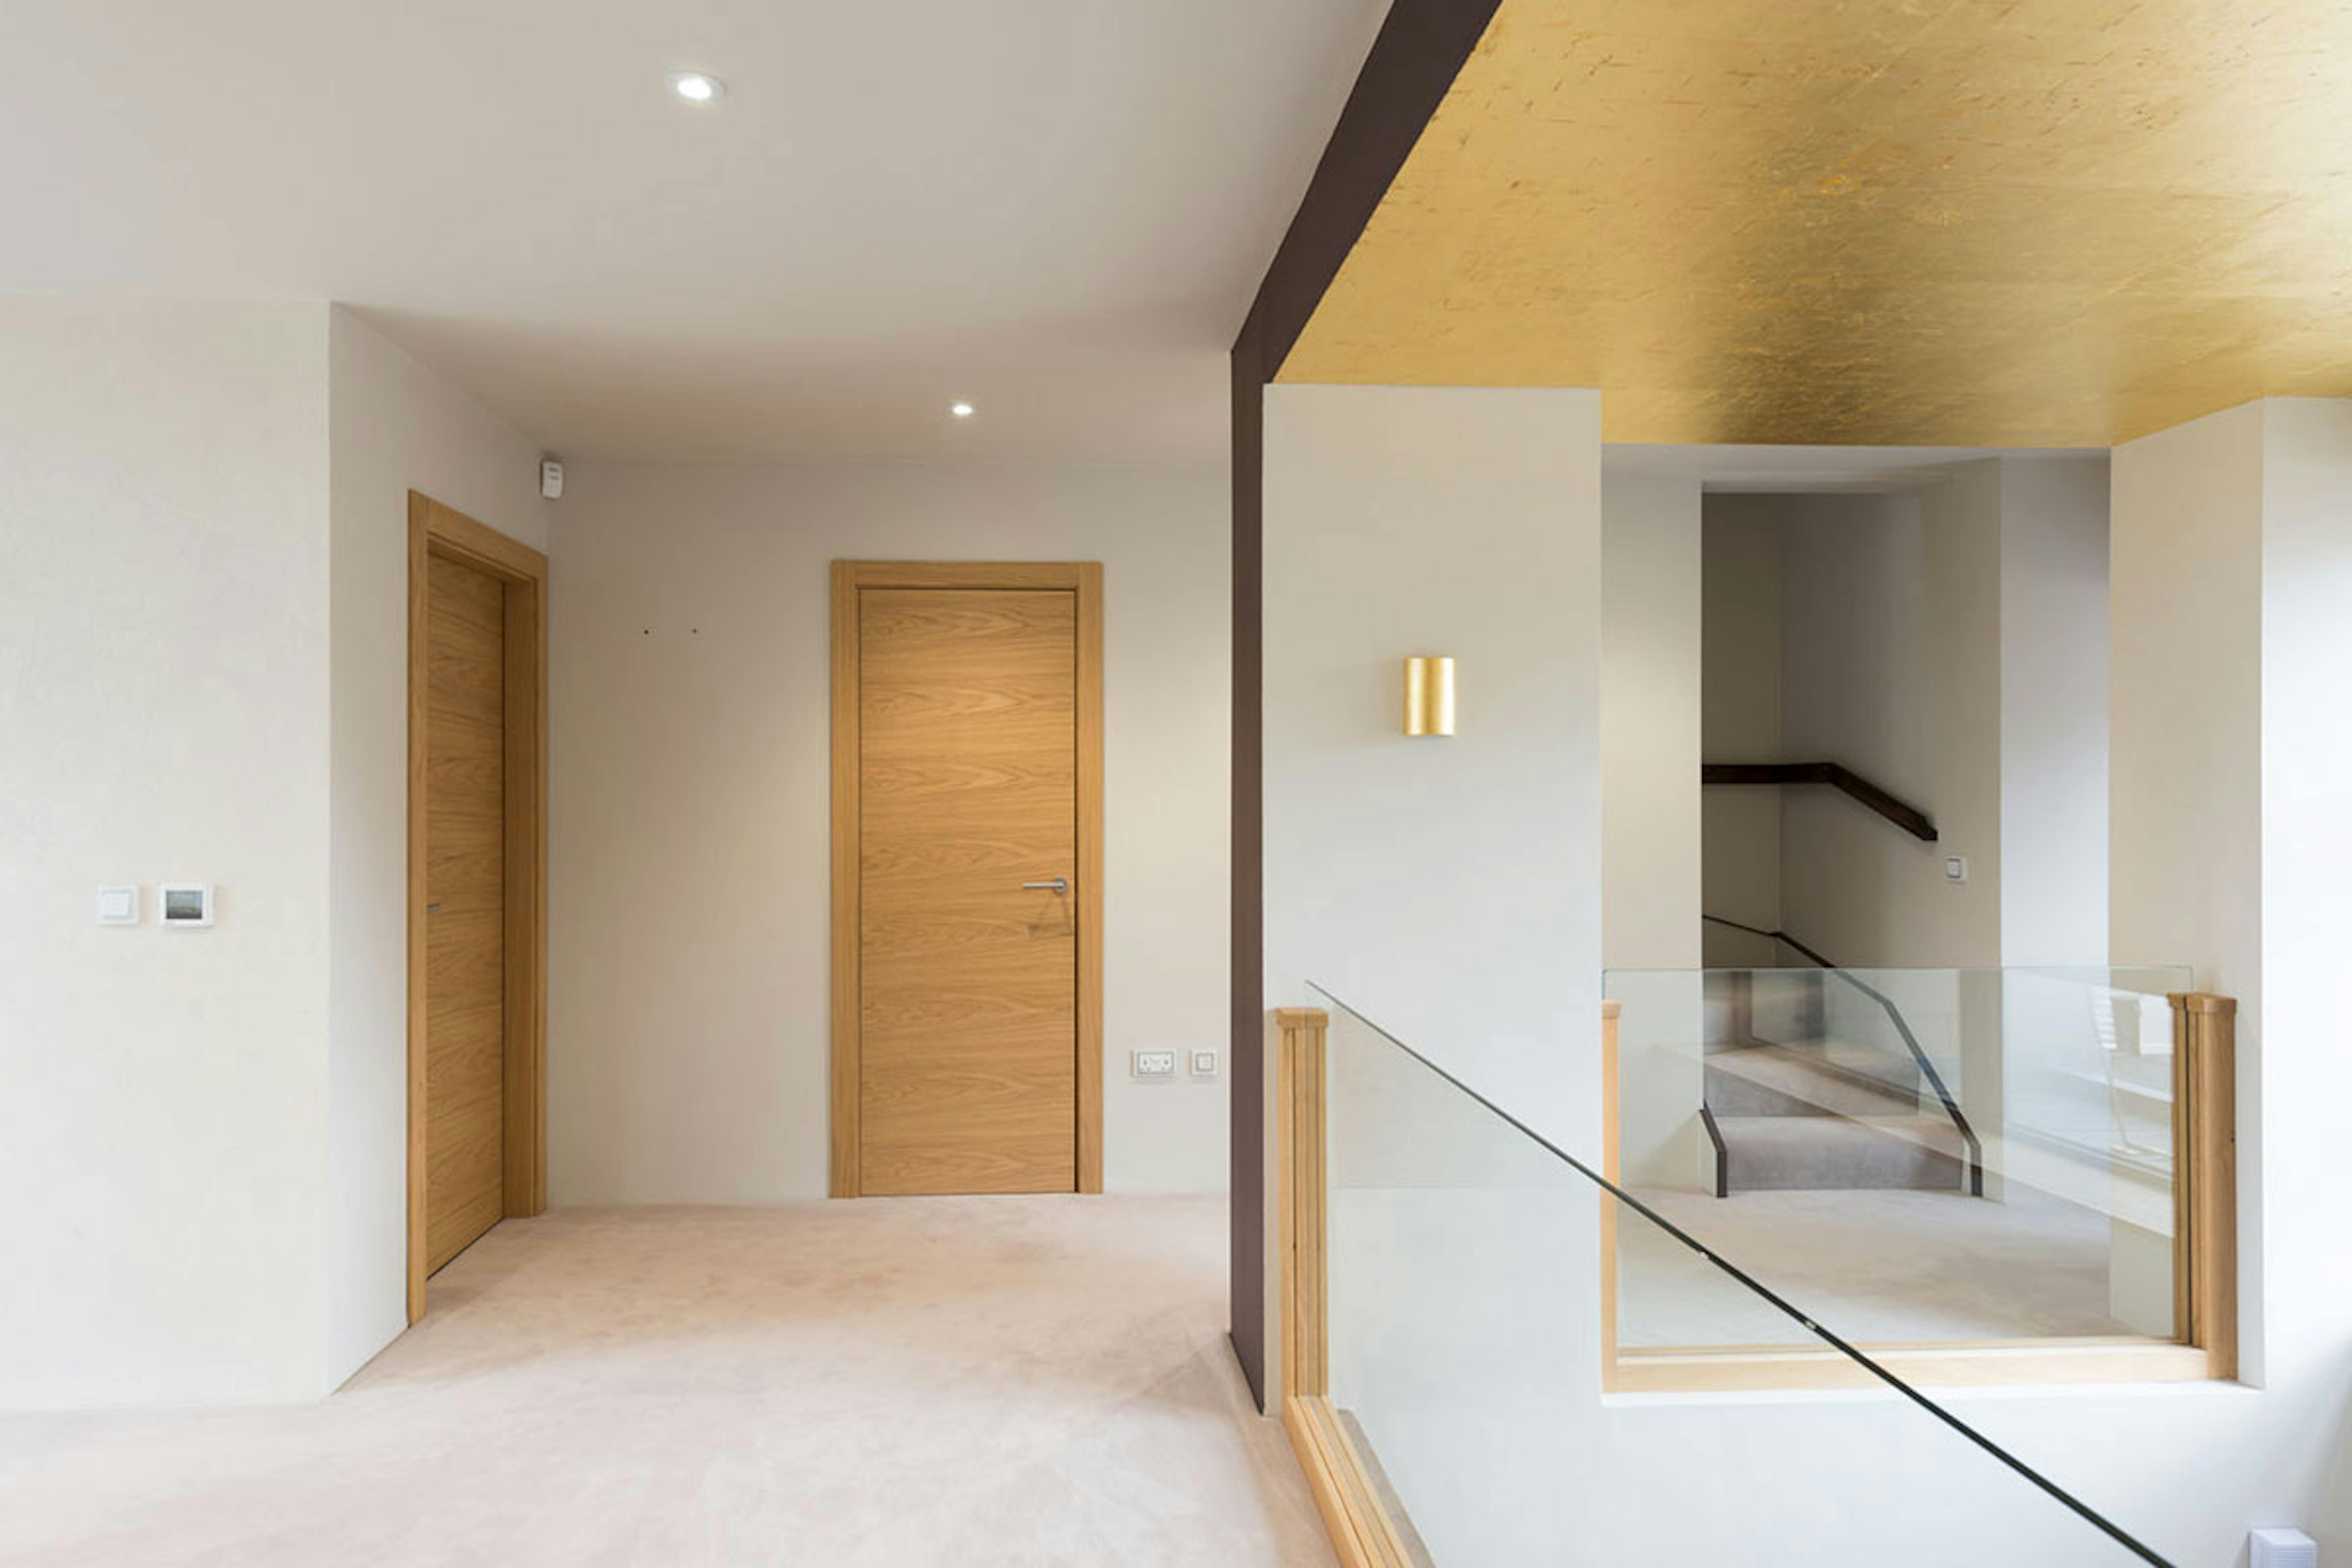 Modern self-build property featuring Deuren internal door sets in Trem H, Natural Oak